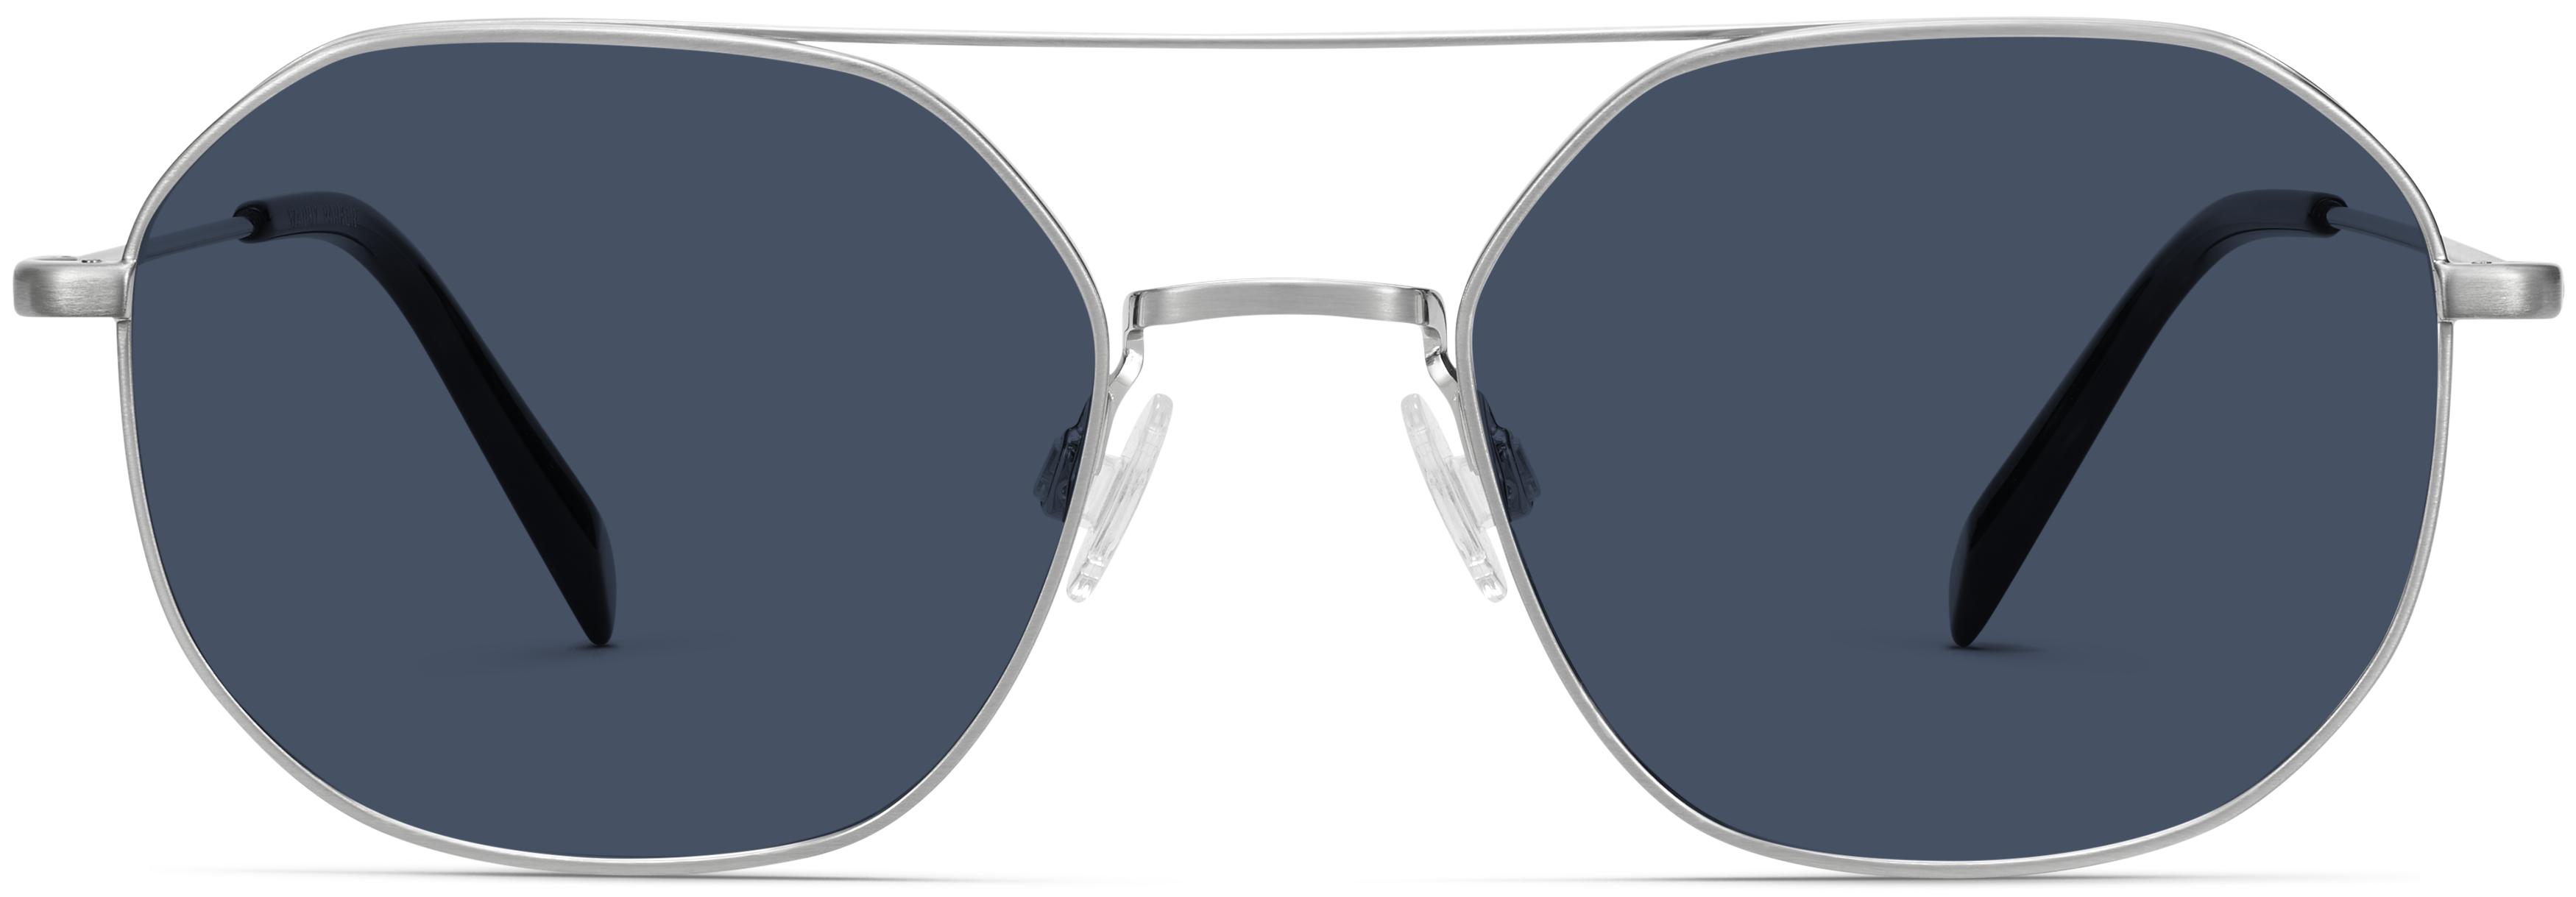 Sunglasses Man Photos, Download The BEST Free Sunglasses Man Stock